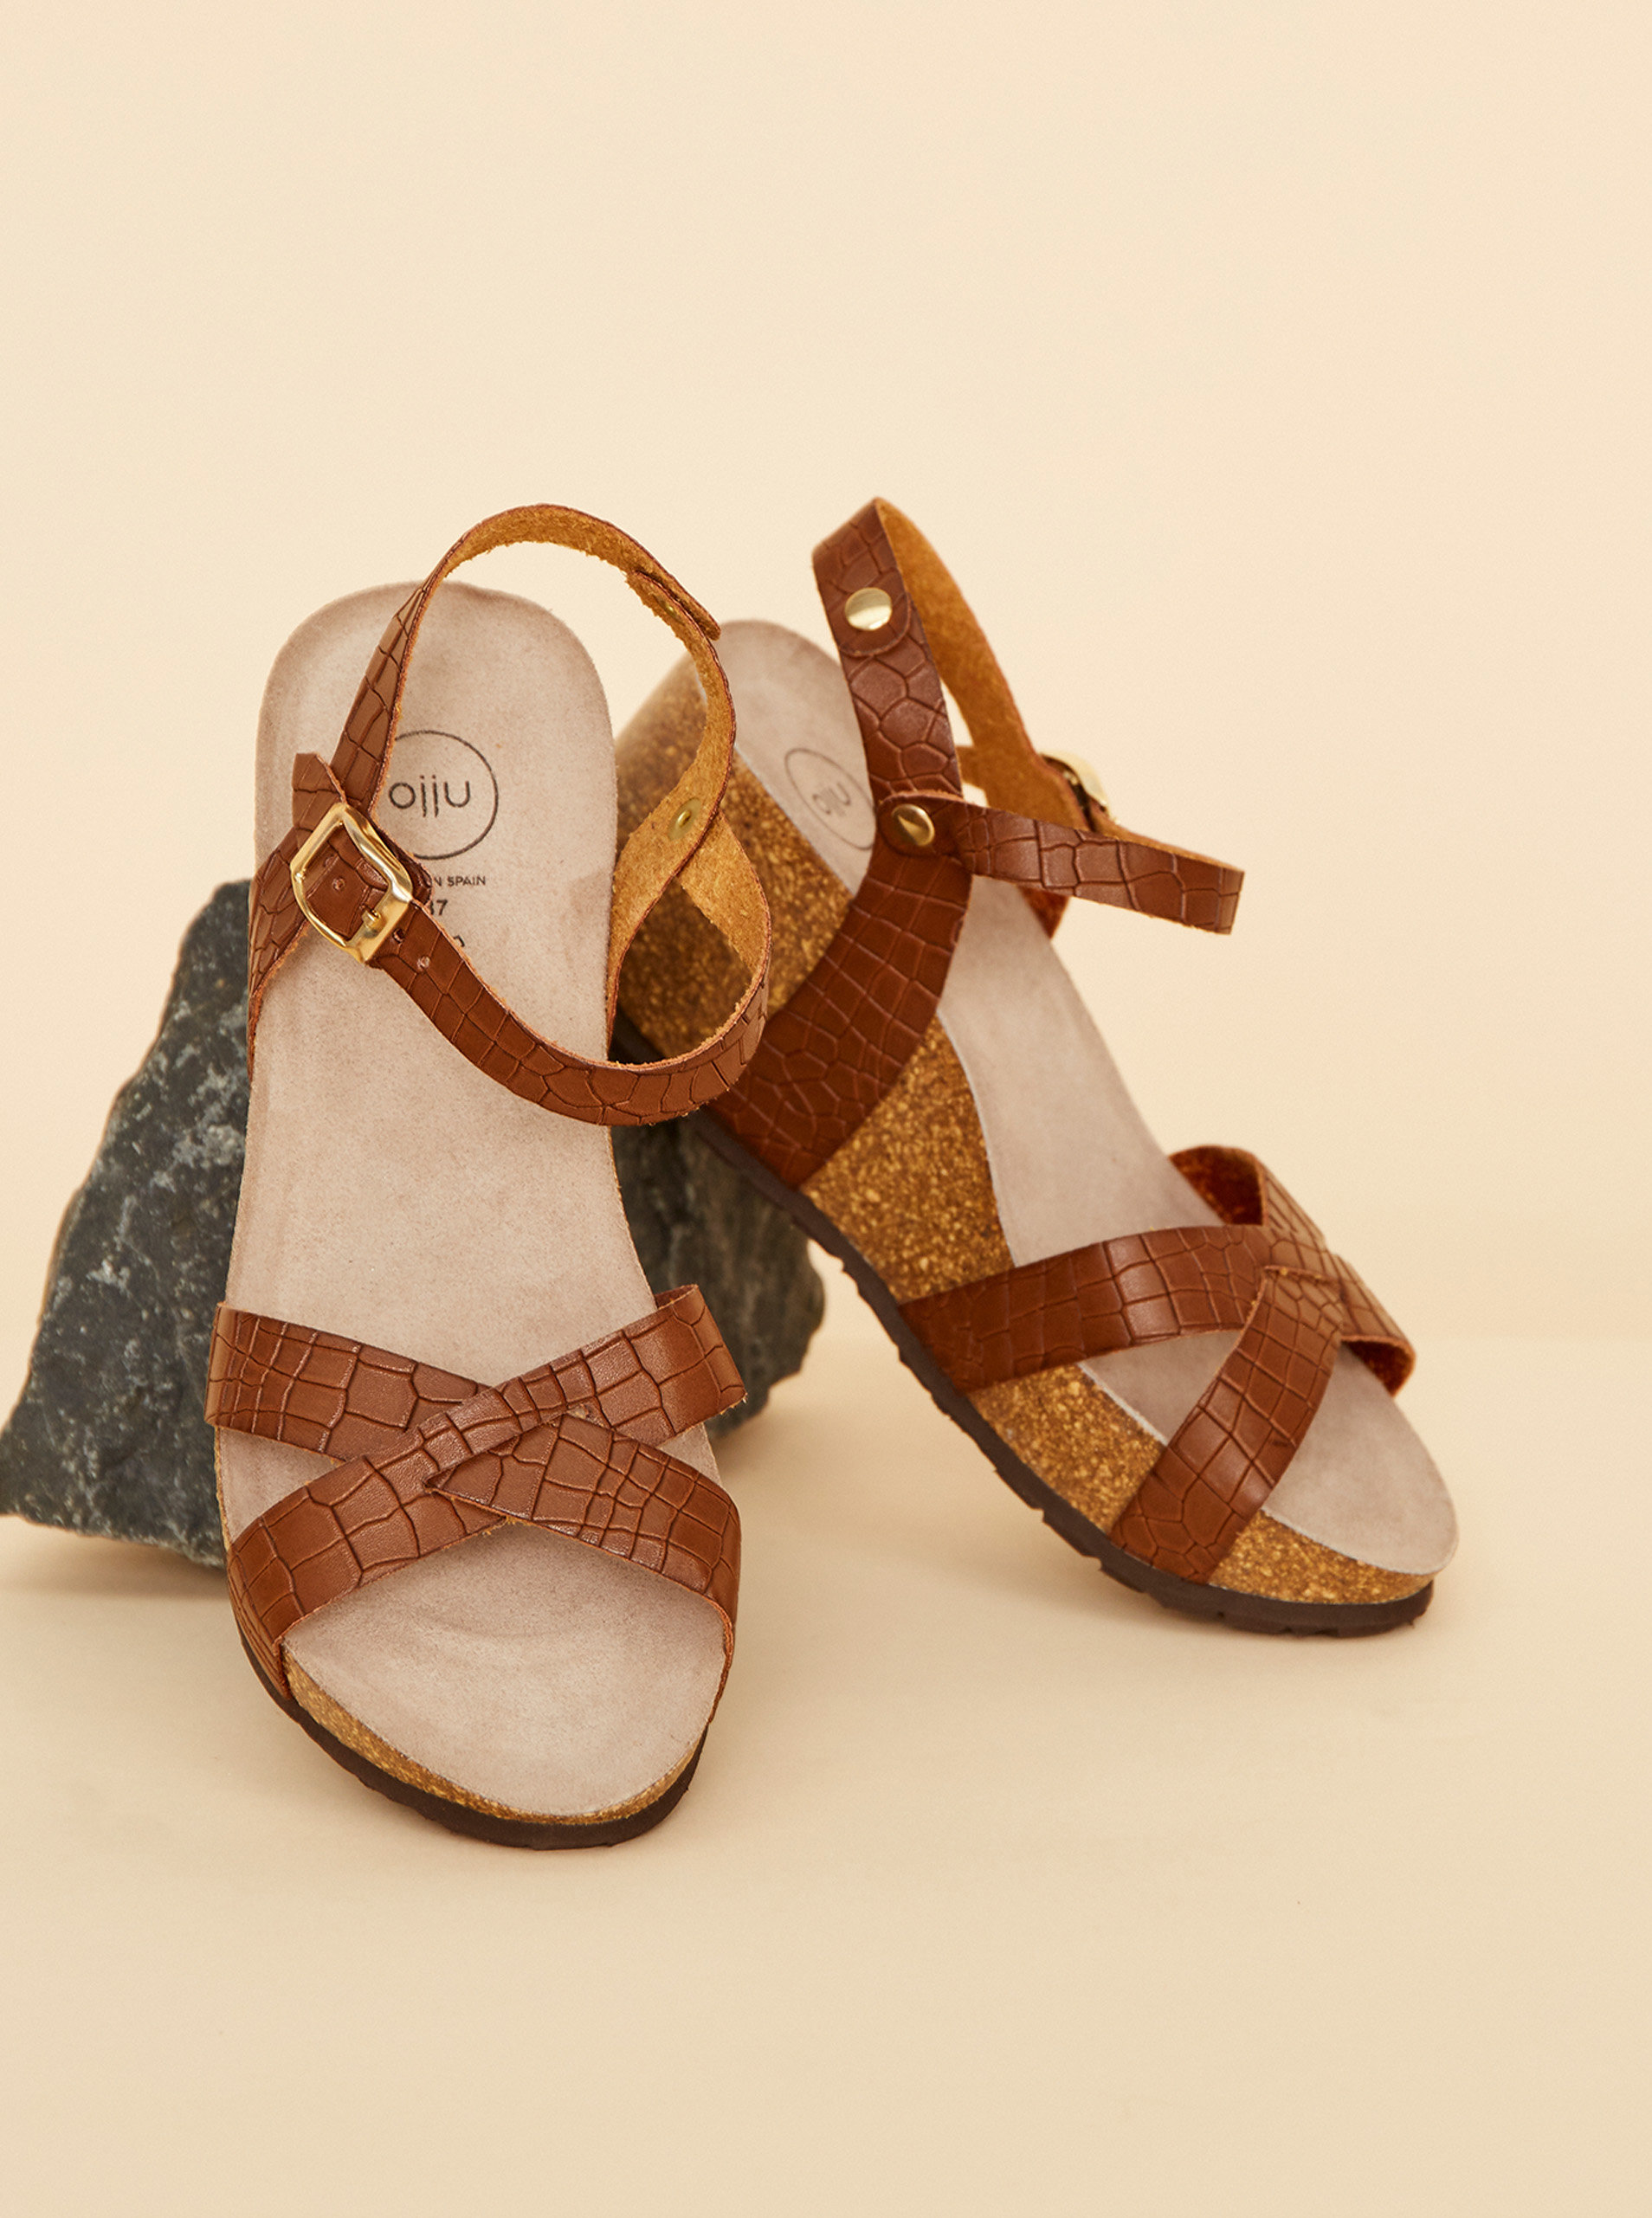 Fotografie Hnědé dámské kožené vzorované sandálky na klínku OJJU OJJU A22:1306503_250